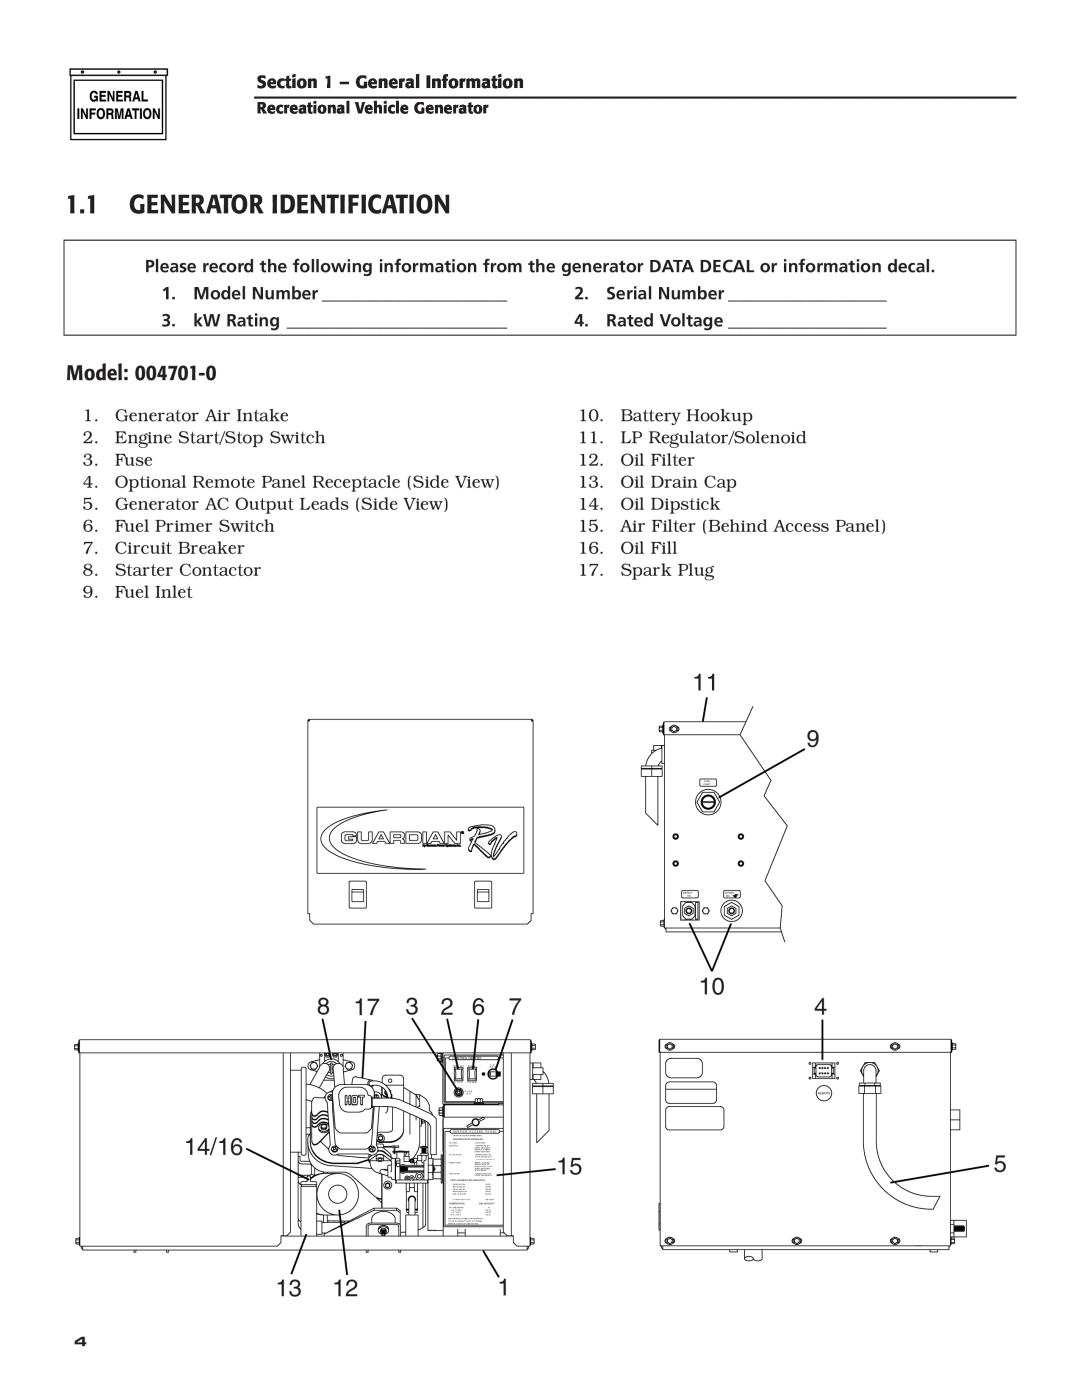 Guardian Technologies 004701-0 owner manual 1.1Generator Identification 